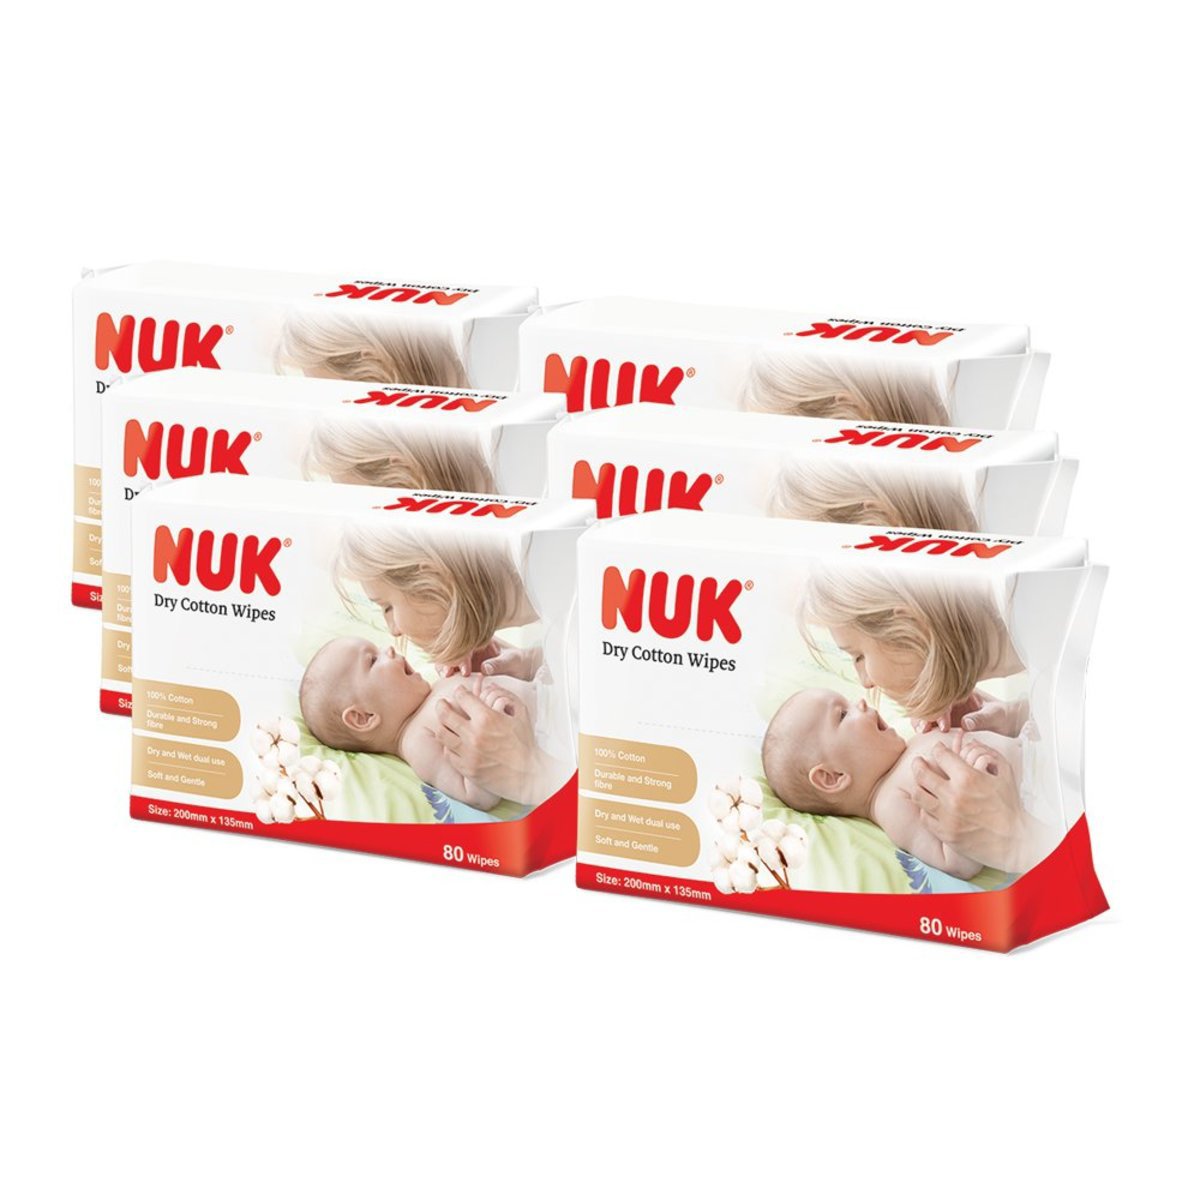 NUK Dry Cotton Wipes 80pc - 6 Packs